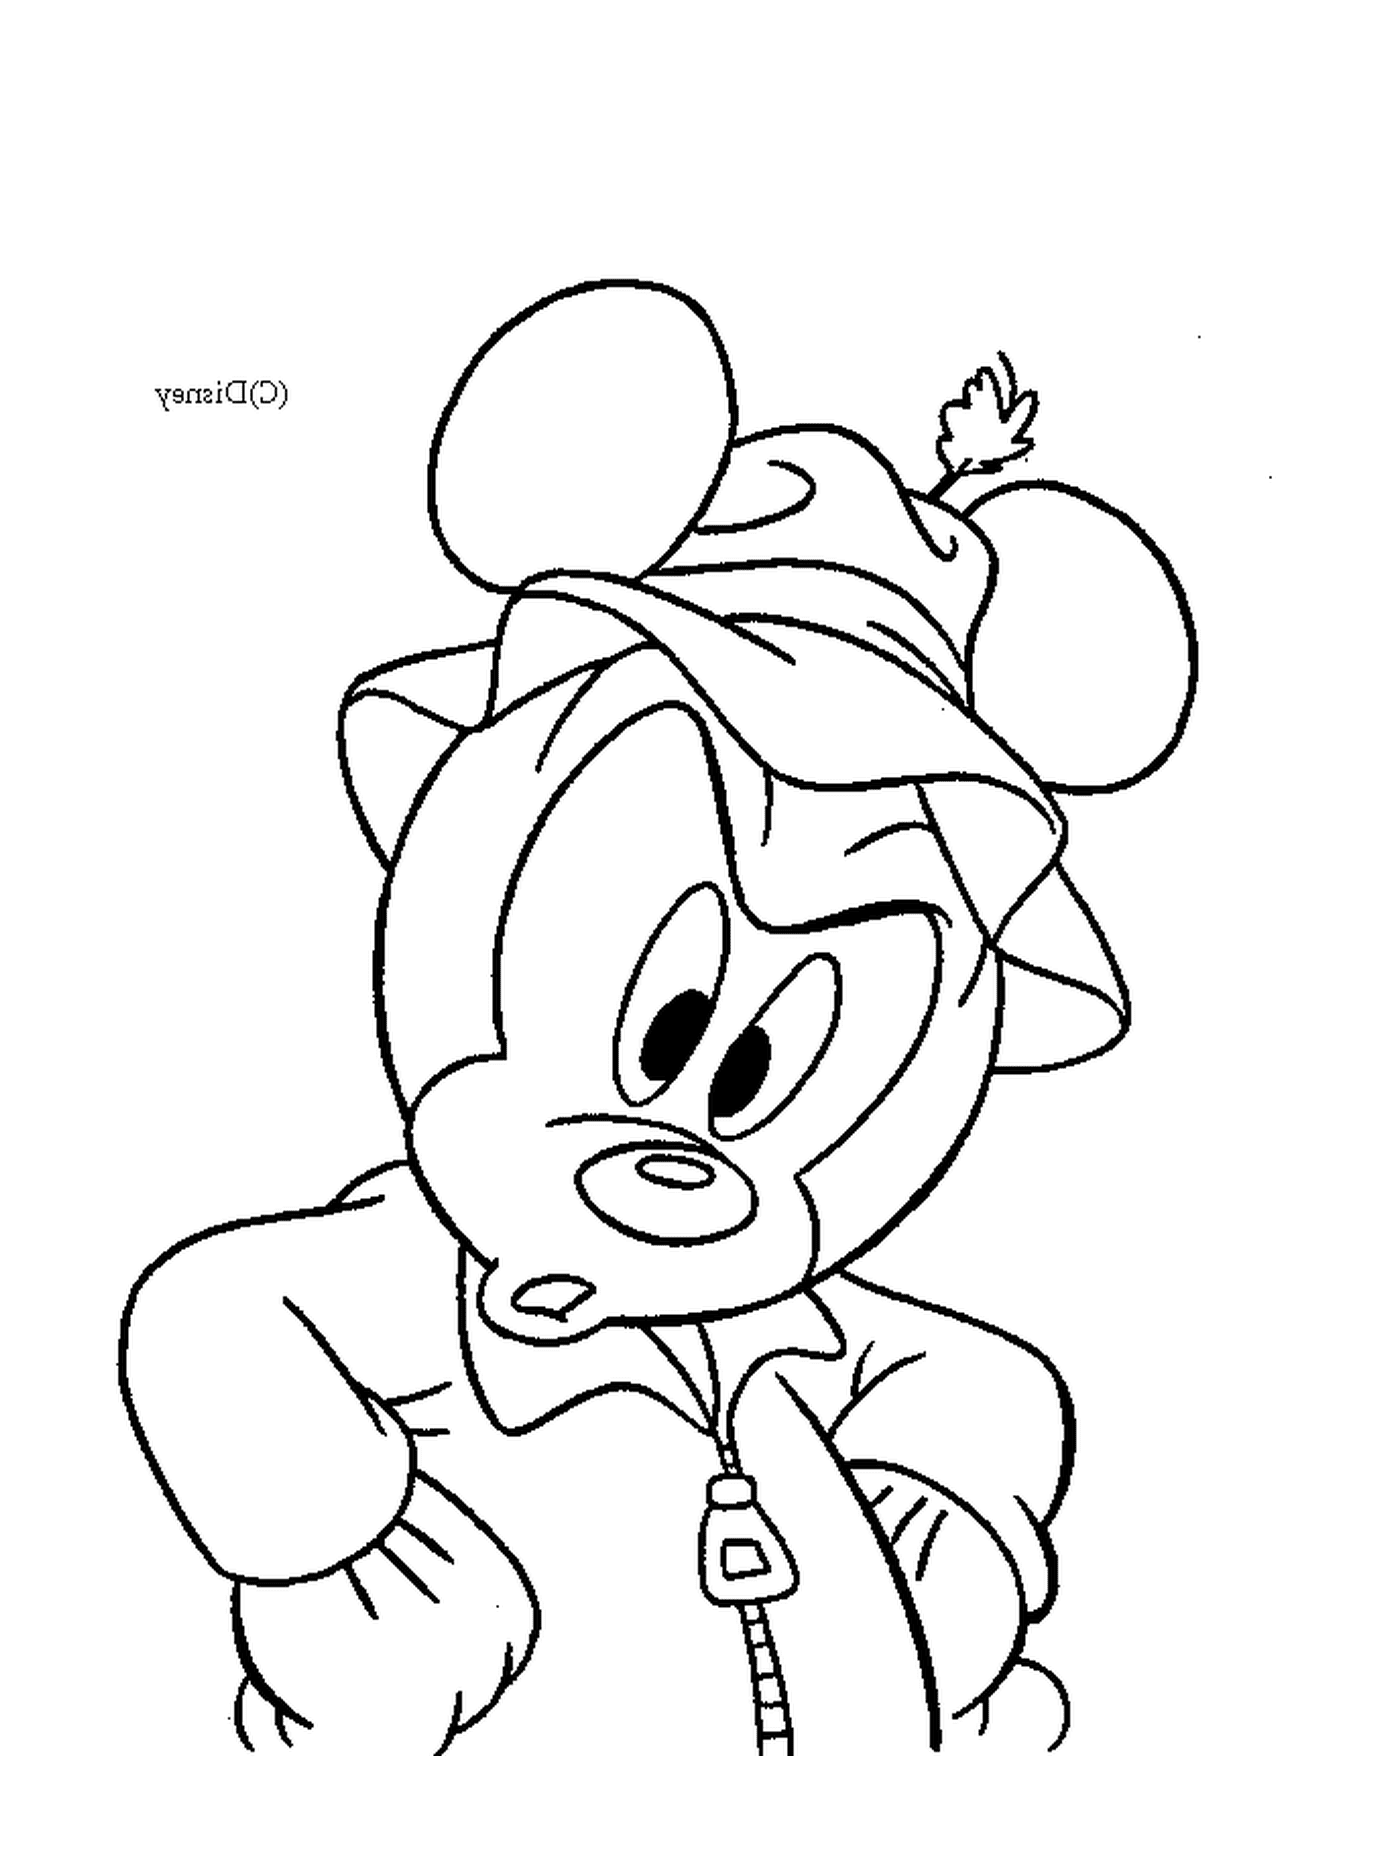  Dibujo de Mickey a color: Mickey Mouse con sombrero 